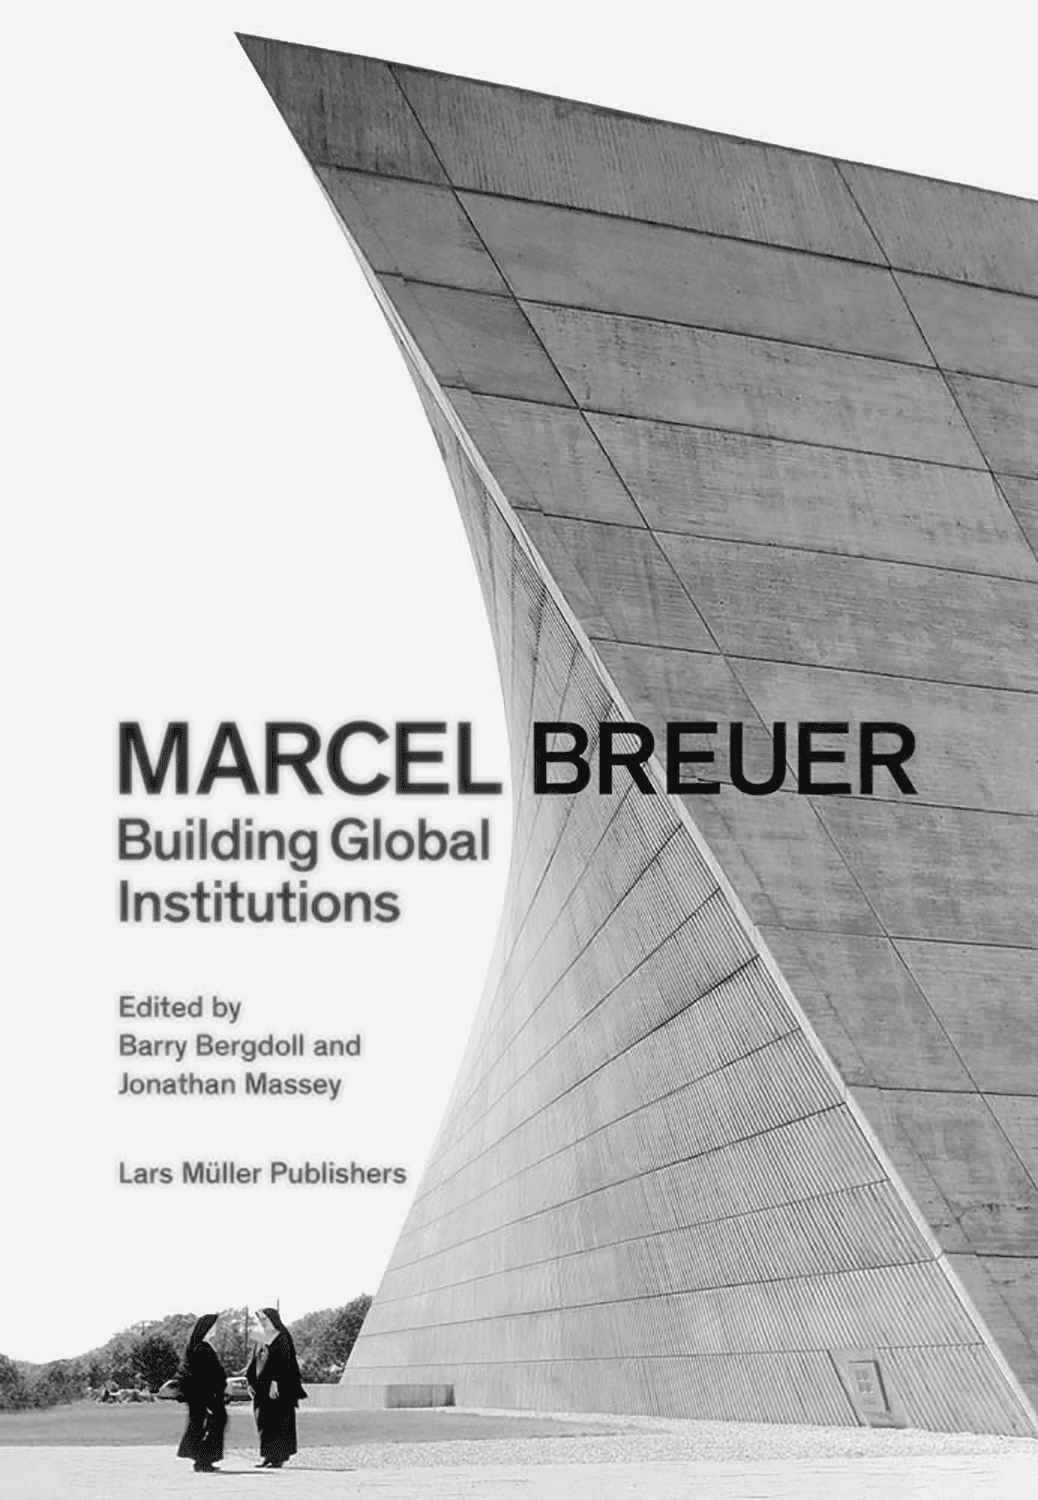 Marcel Breuer Digital Archive